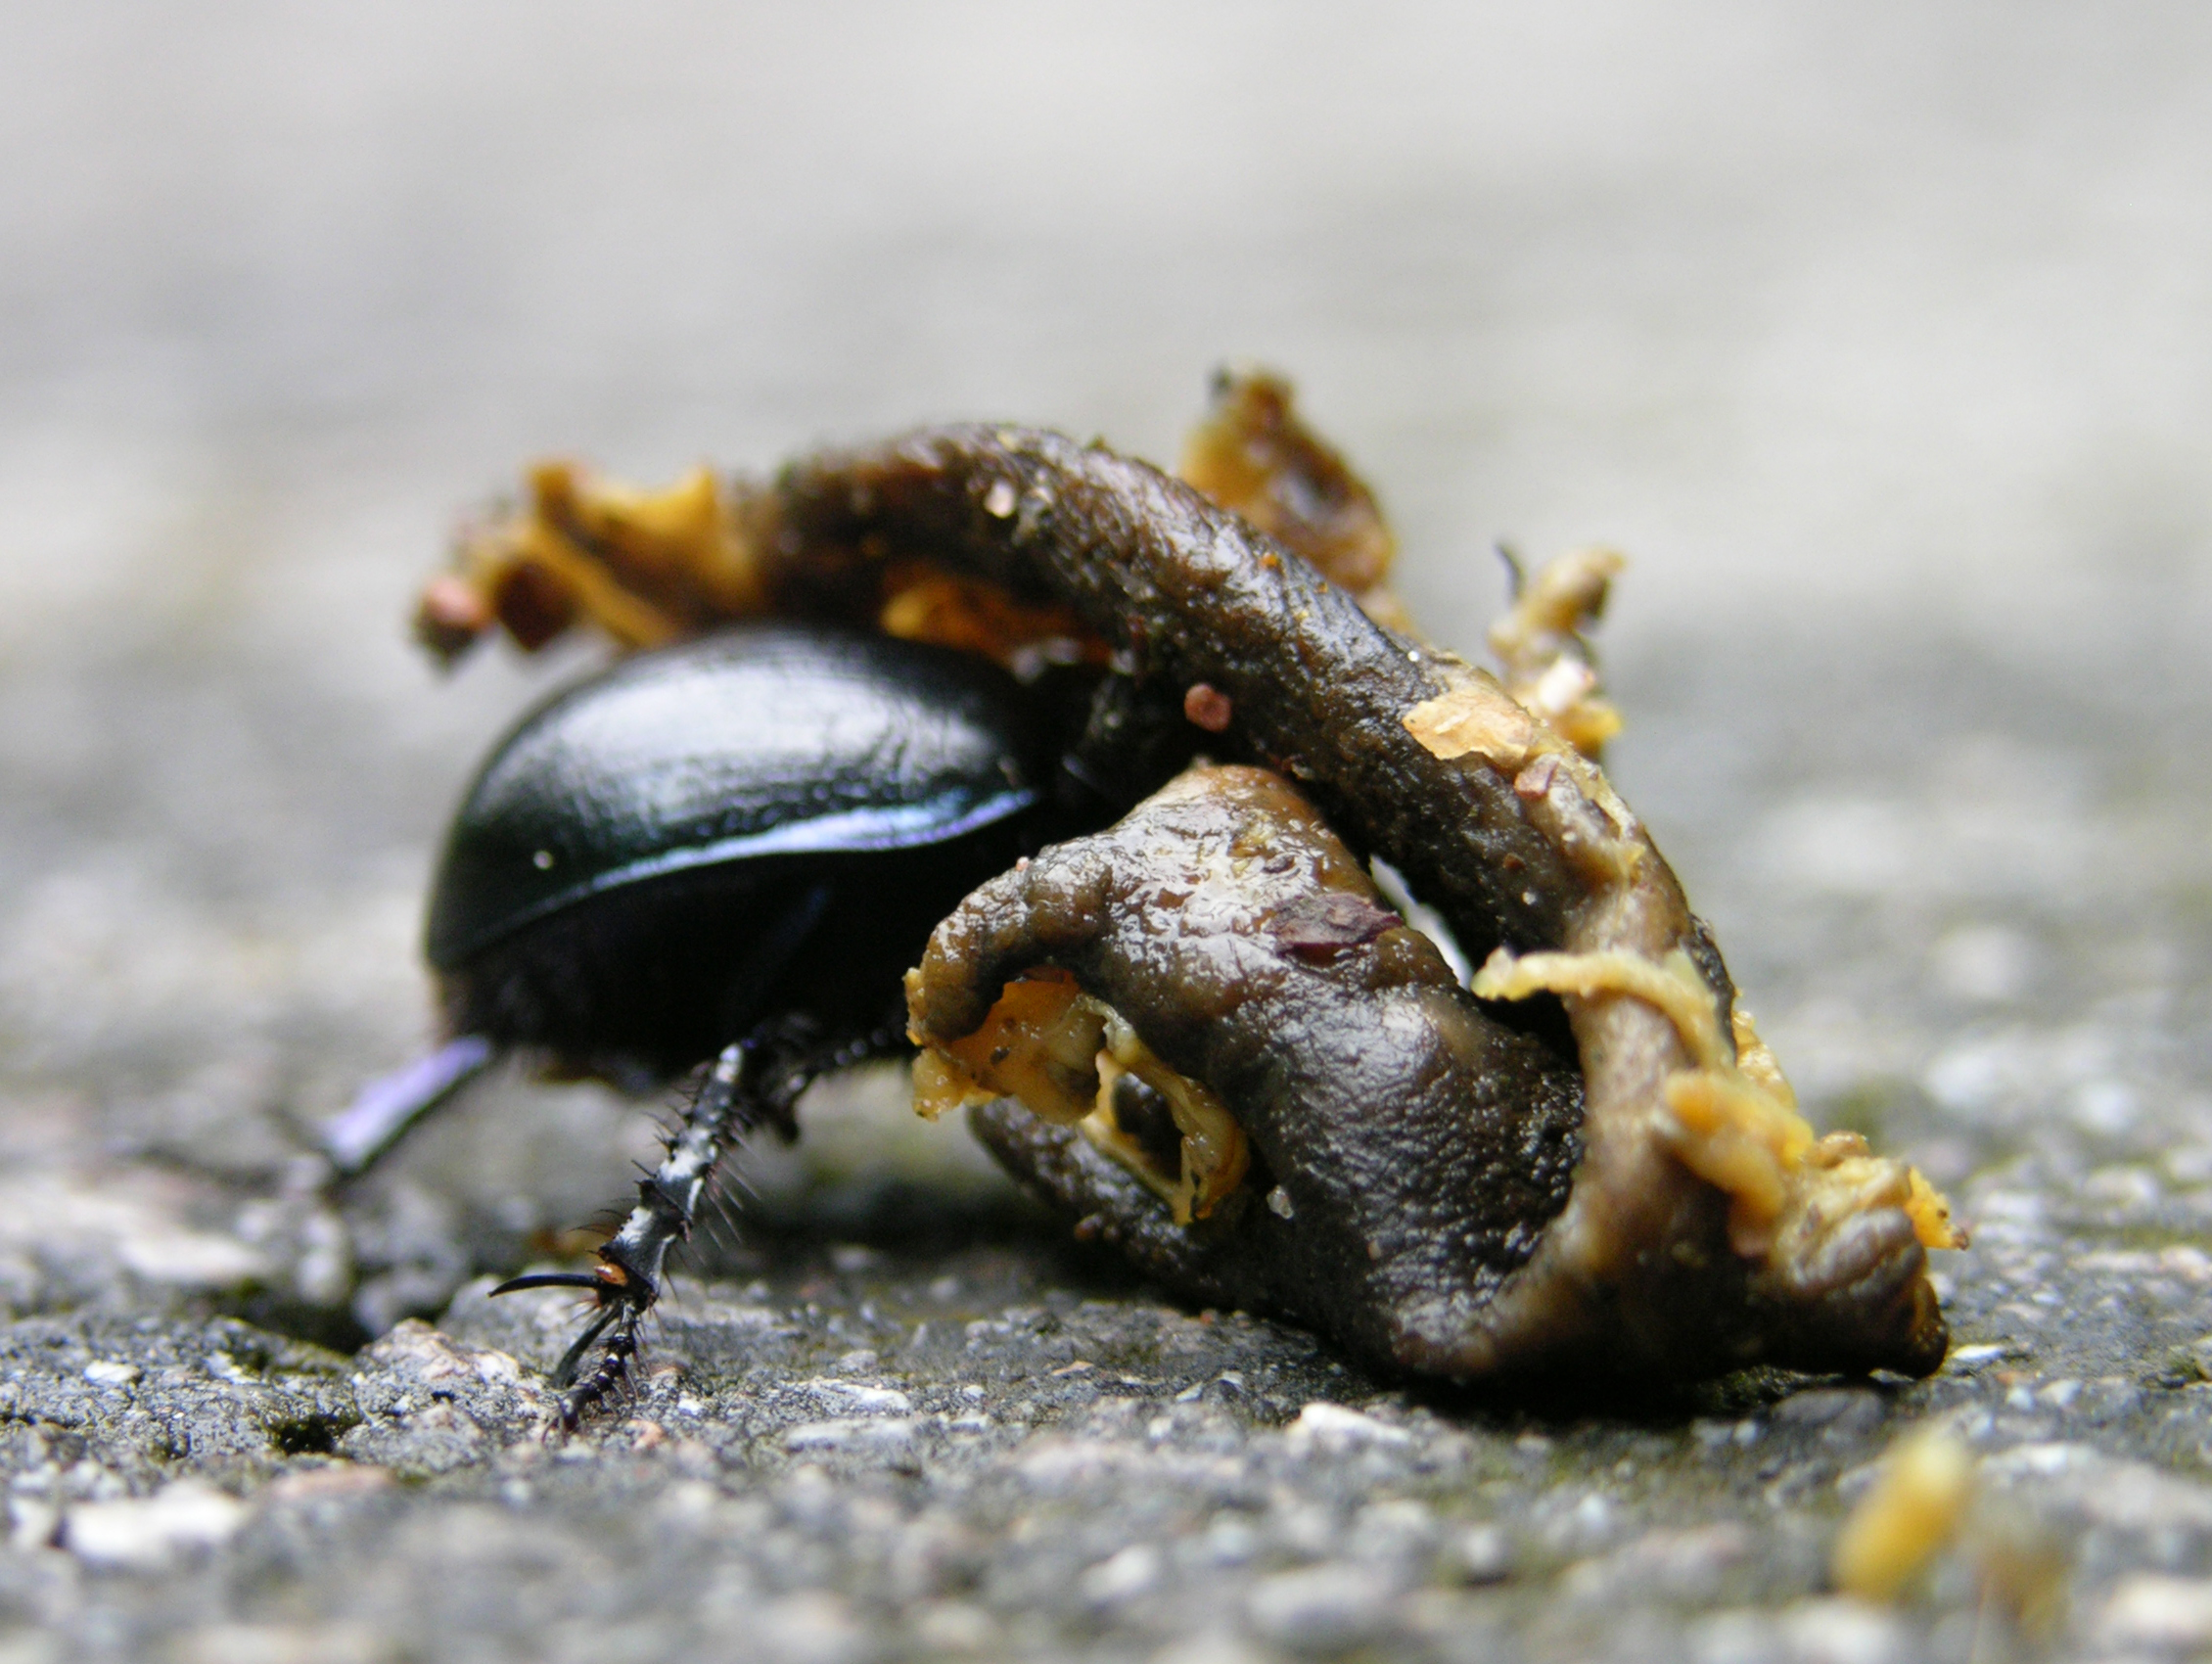 Dead snail photo